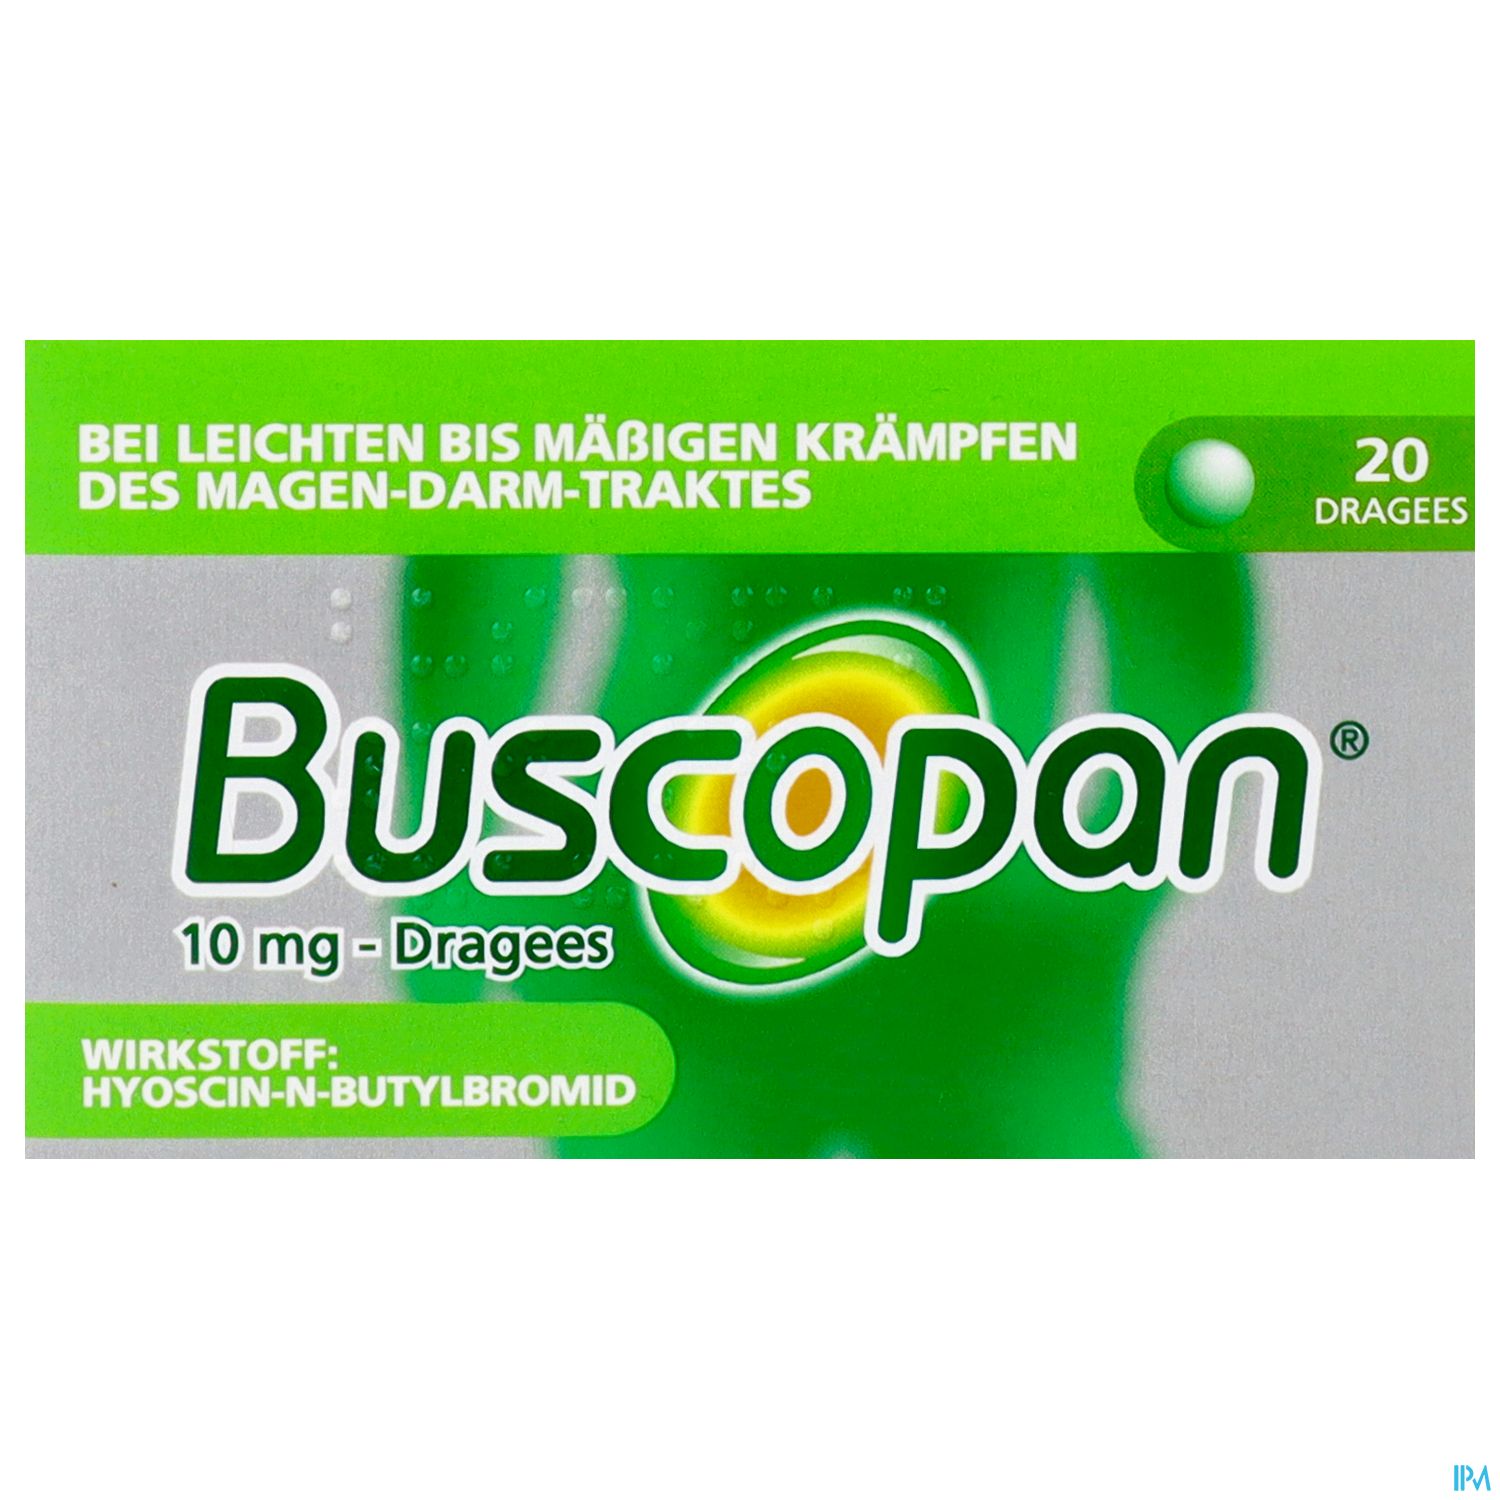 Buscopan 10 mg - Dragees